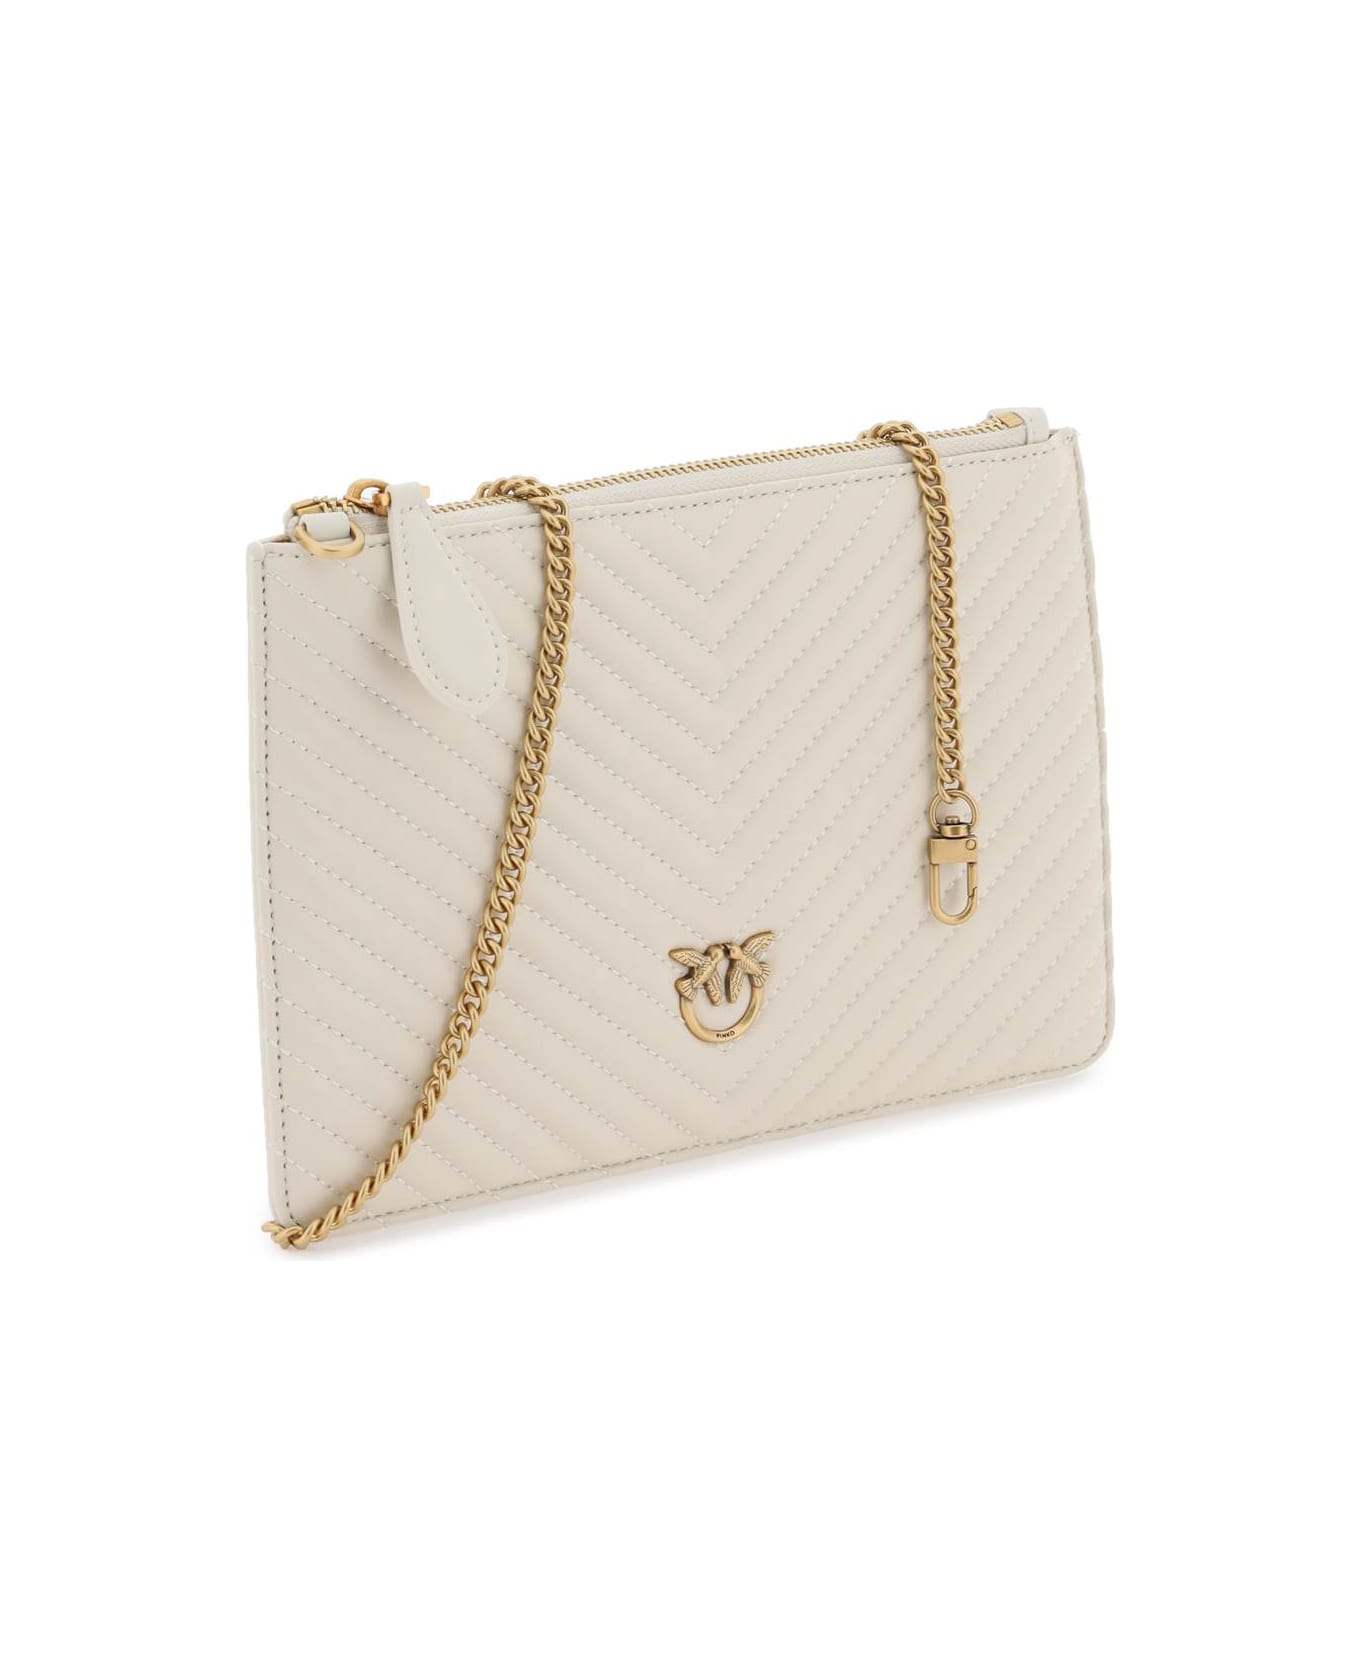 Pinko Classic Flat Love Bag Simply Clutch - BIANCO SETA ANTIQUE GOLD (White)